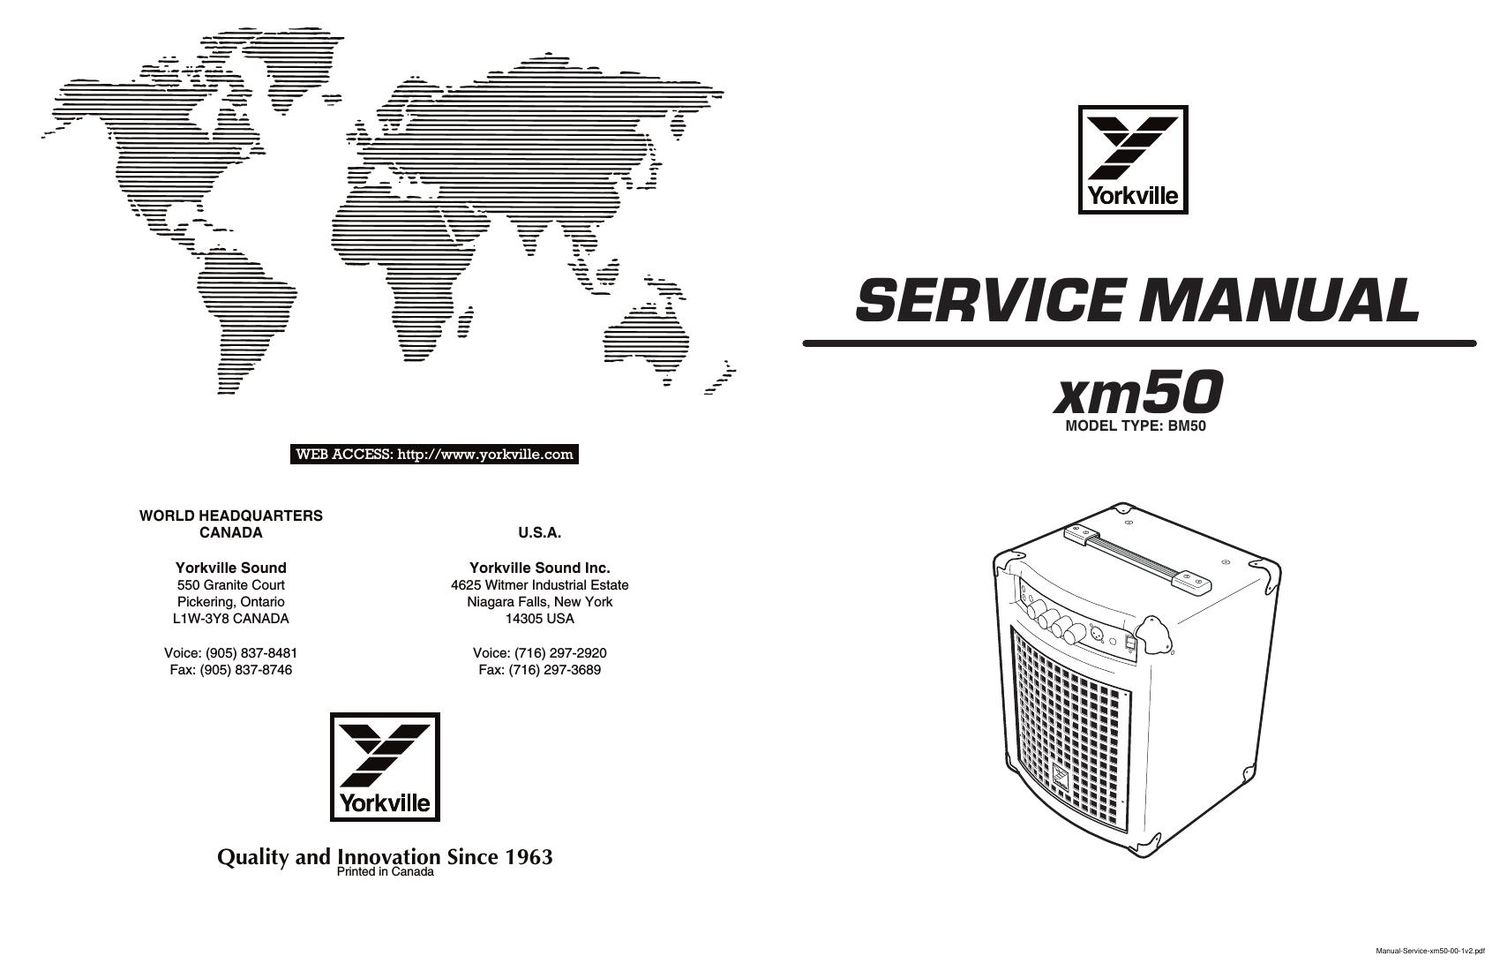 Yorkville xm50 Service Manual